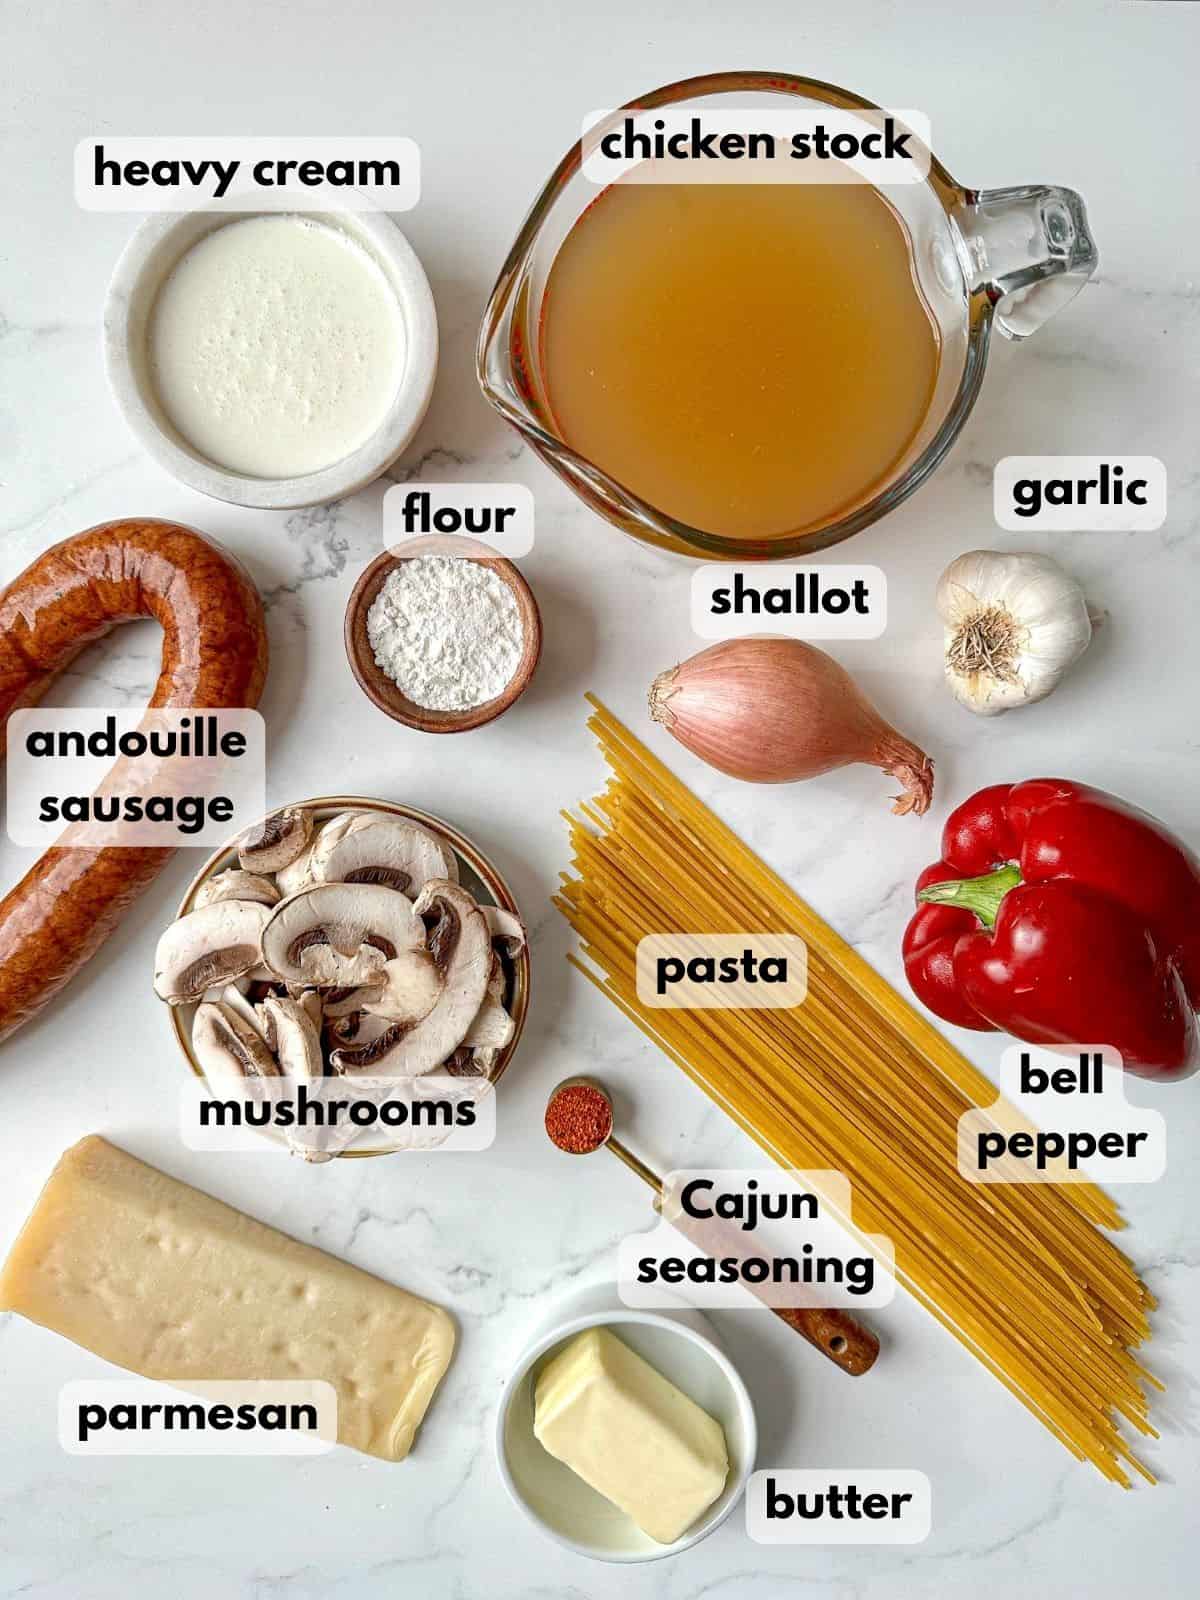 Ingredients needed to cook Cajun spaghetti: pasta, andouille sausage, red bell pepper, mushrooms, garlic, heavy cream, parmesan cheese, and Cajun seasonings.